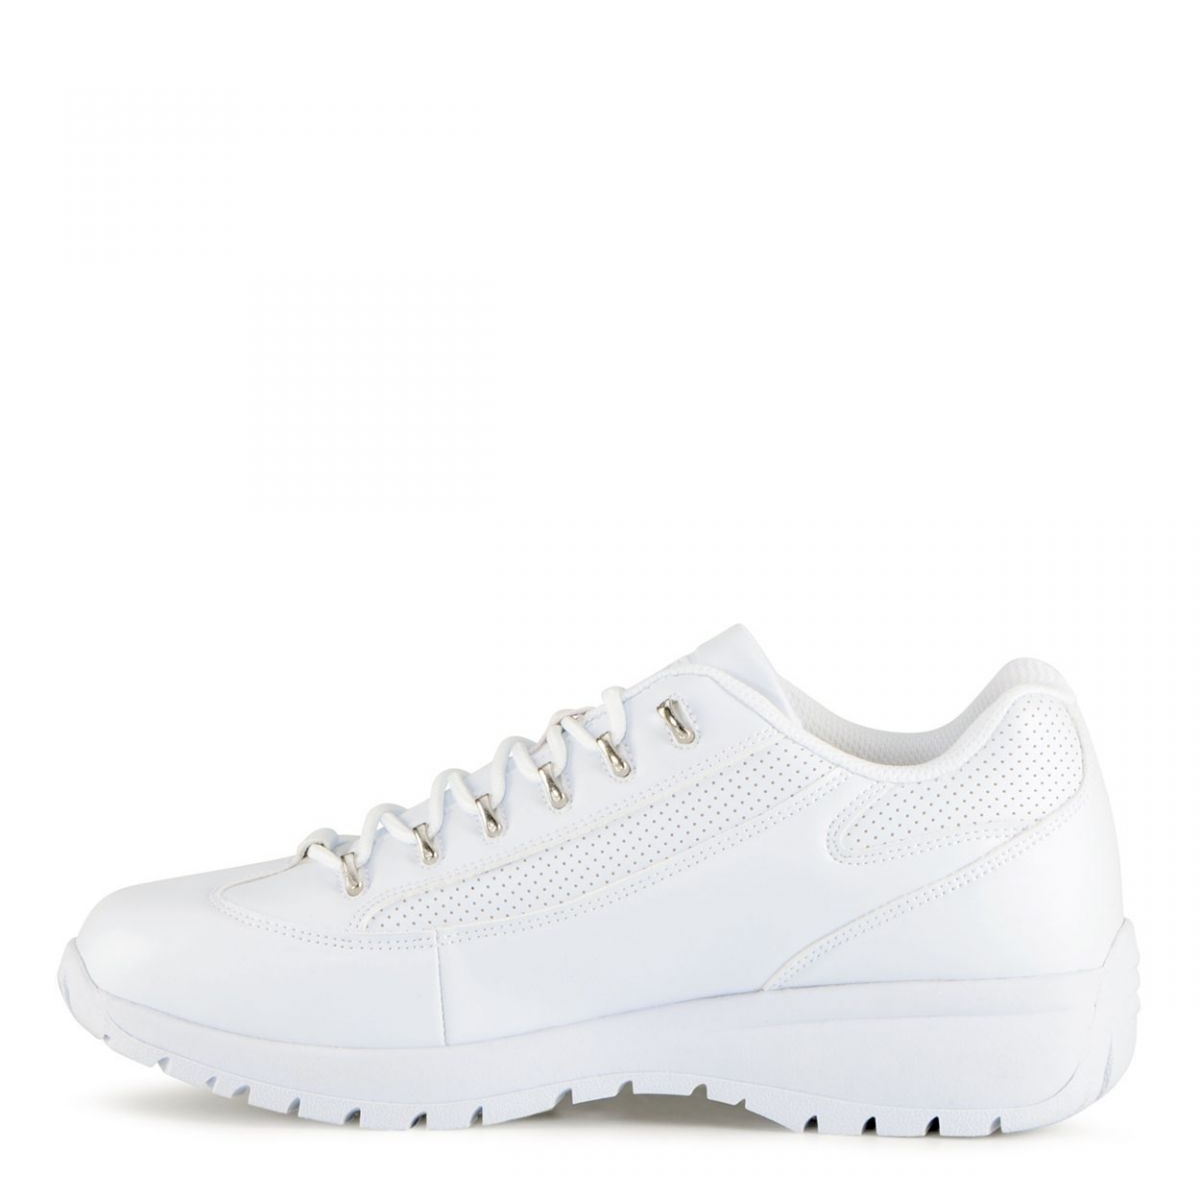 Lugz Men's Express Sneaker White - MEXPRSPV-100 WHITE - WHITE, 9.5